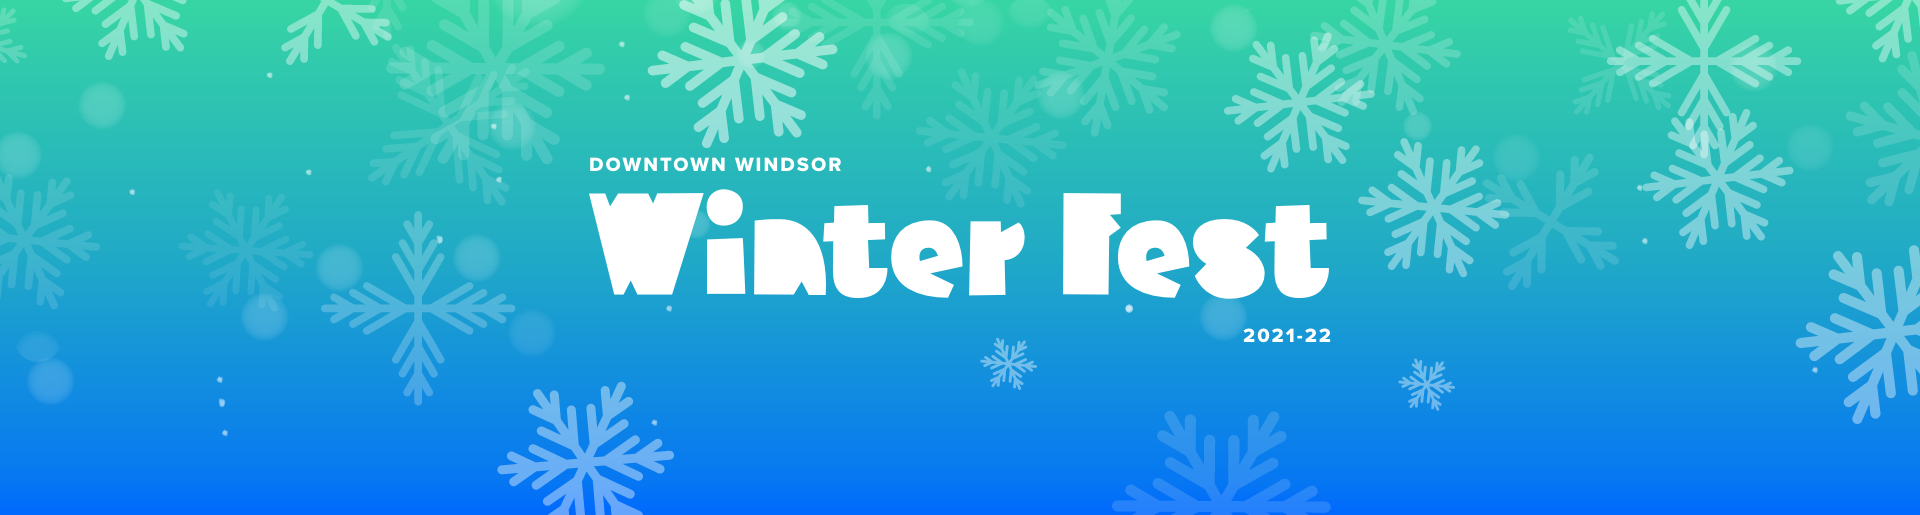 Downtown Windsor Winter Fest 2021-22